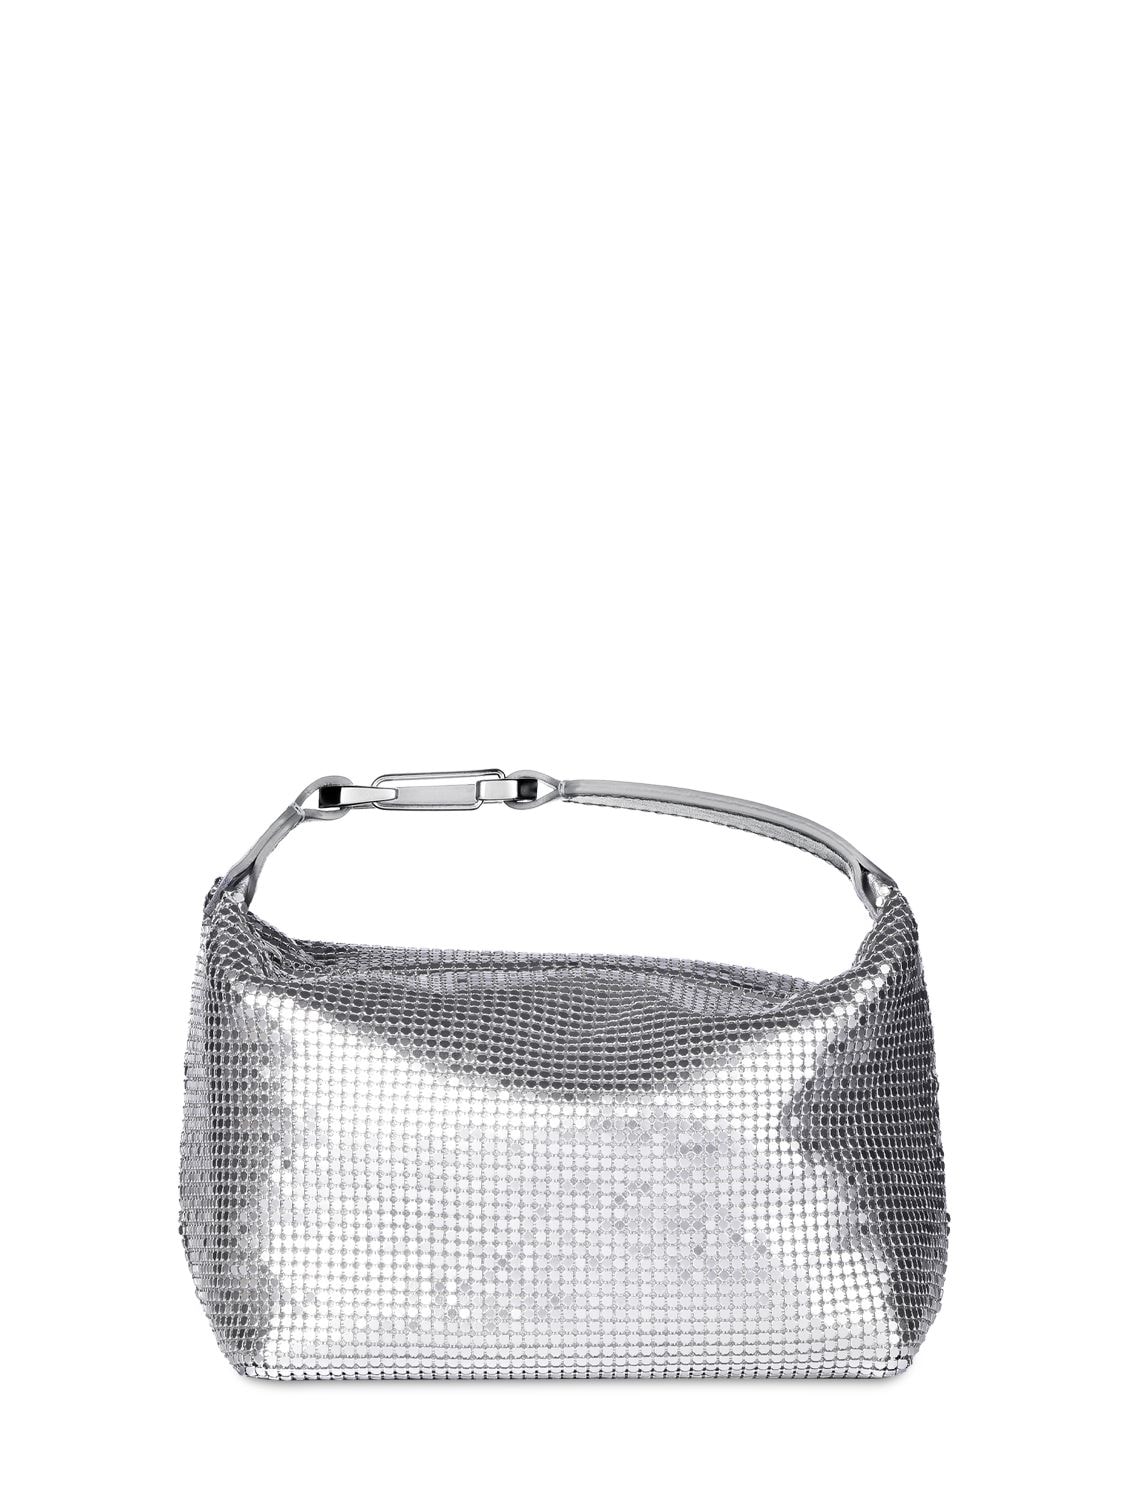 Eéra Moon Leather & Metal Mesh Top Handle Bag In Silver